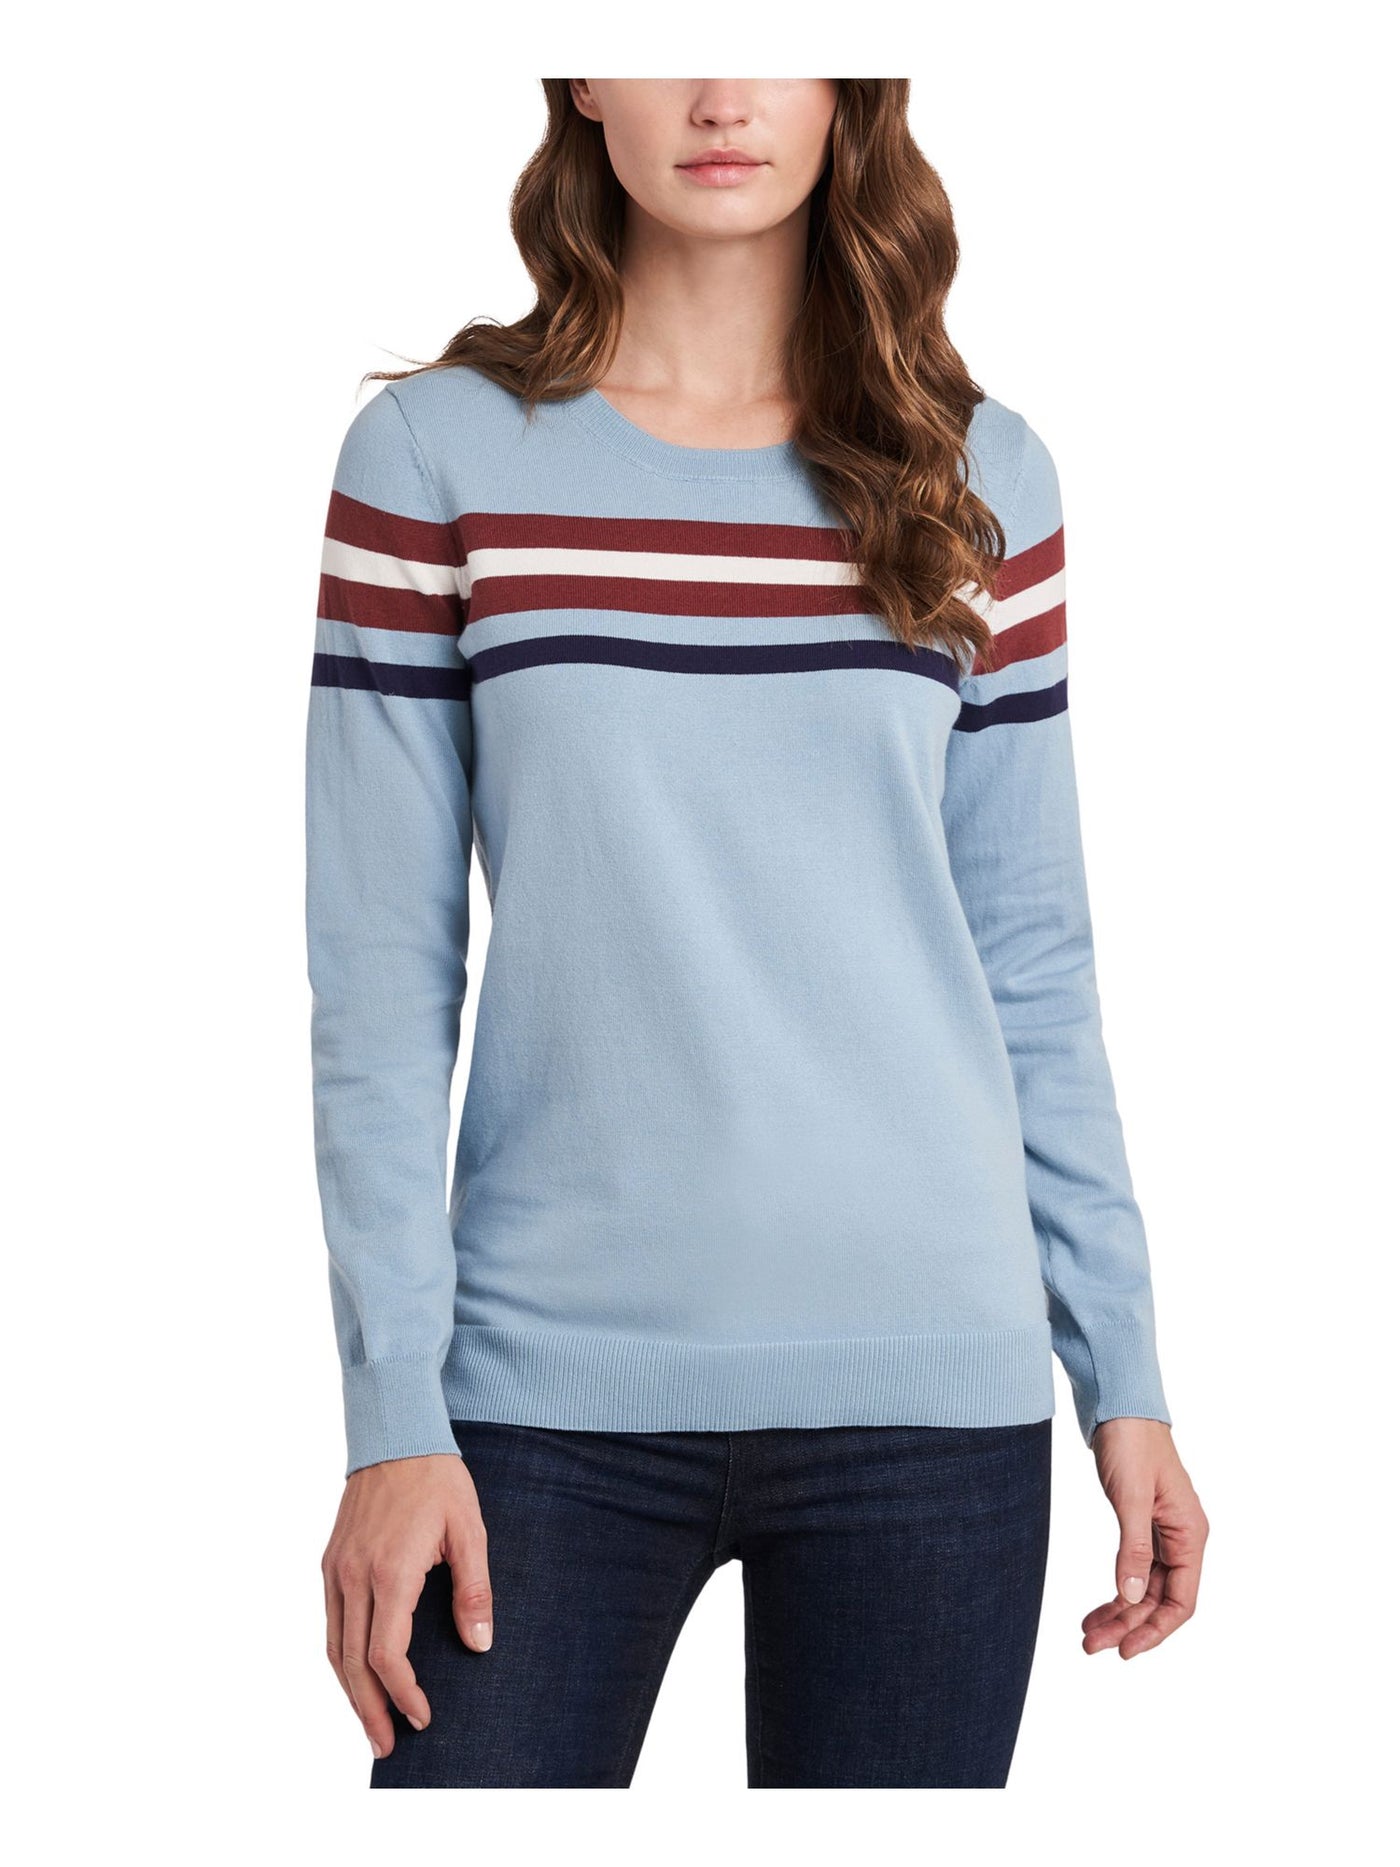 RILEY&RAE Womens Blue Cotton Co-ed Look Striped Long Sleeve Crew Neck Sweater XXS